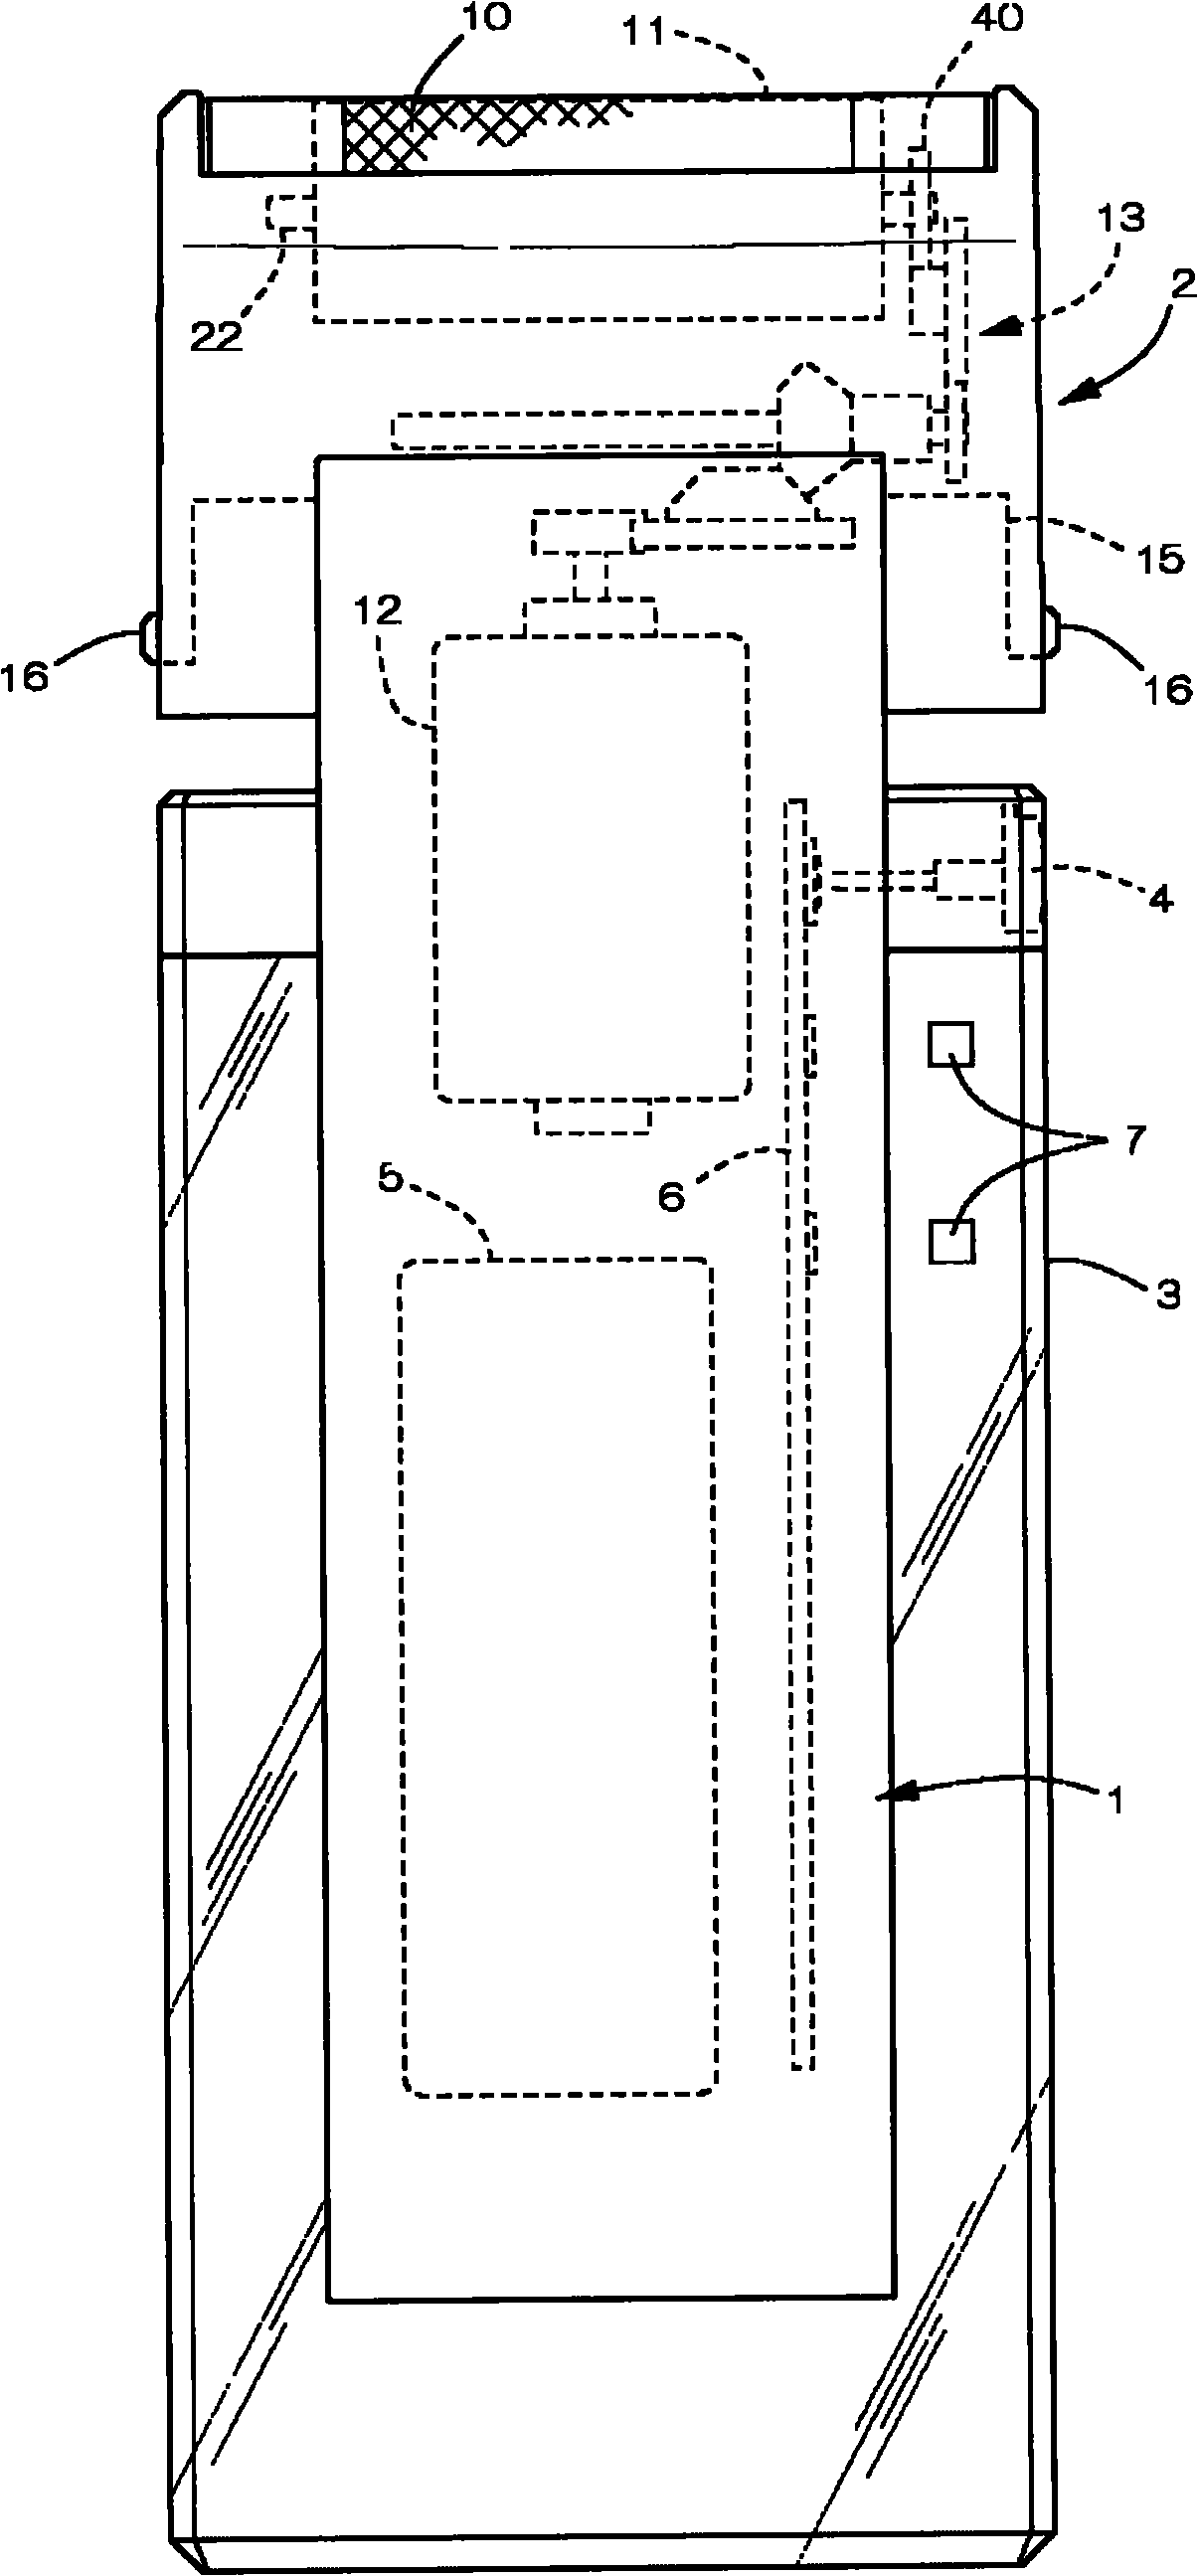 Rotator blade and small electric instrument having rotator blade